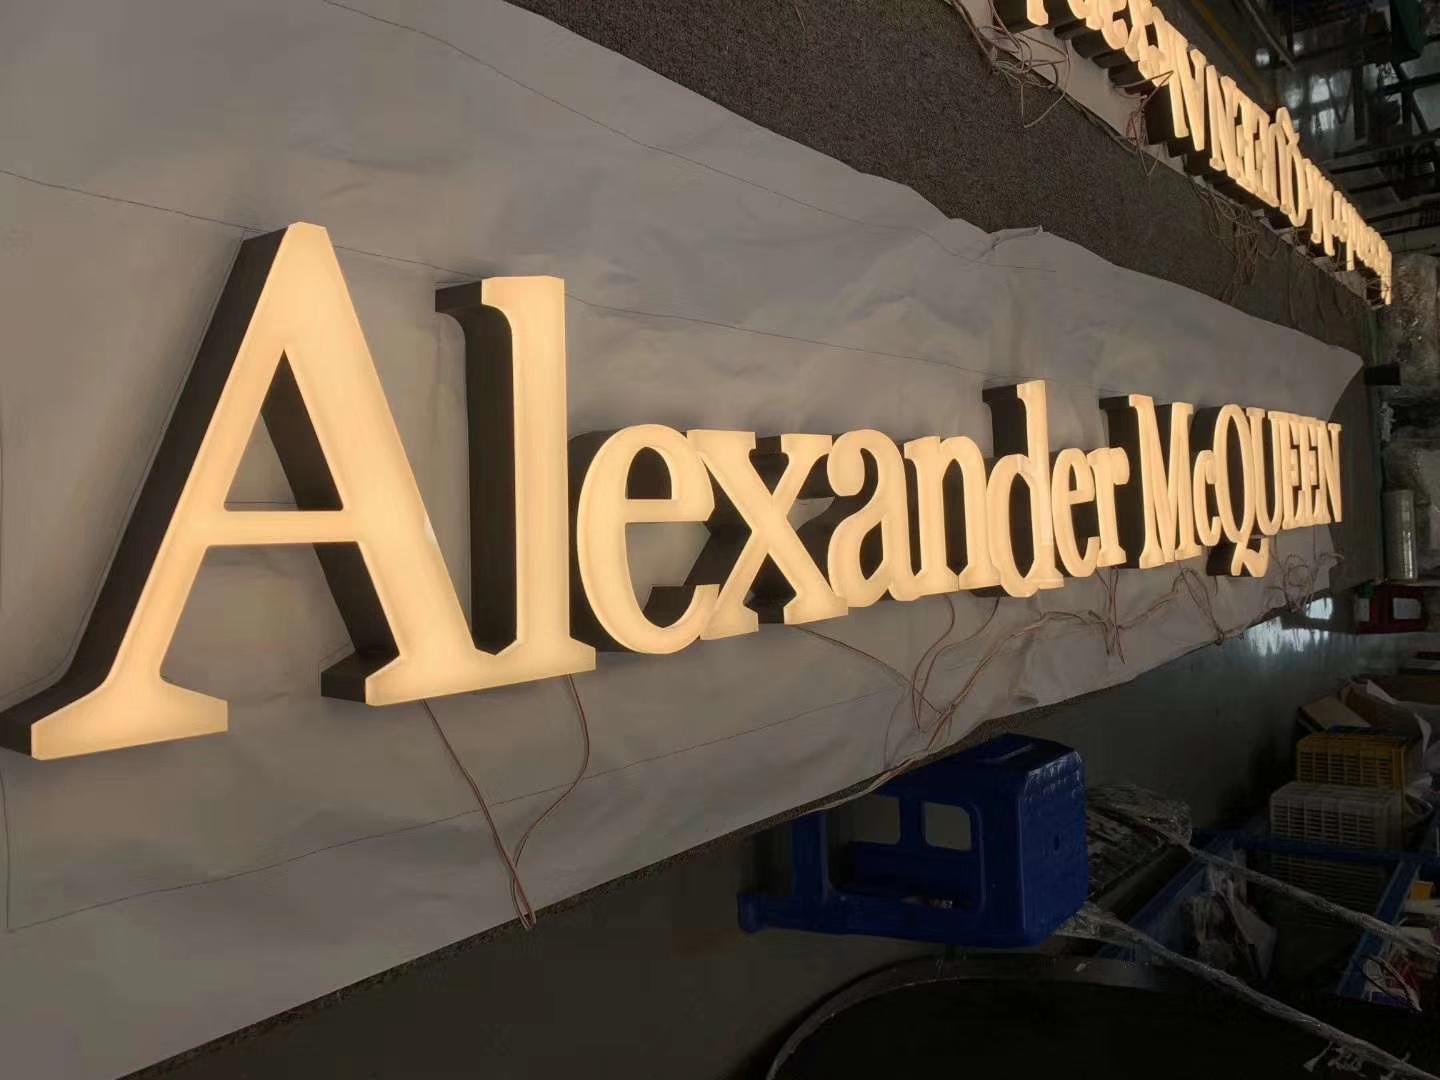 alexander mc queen illuminated sign